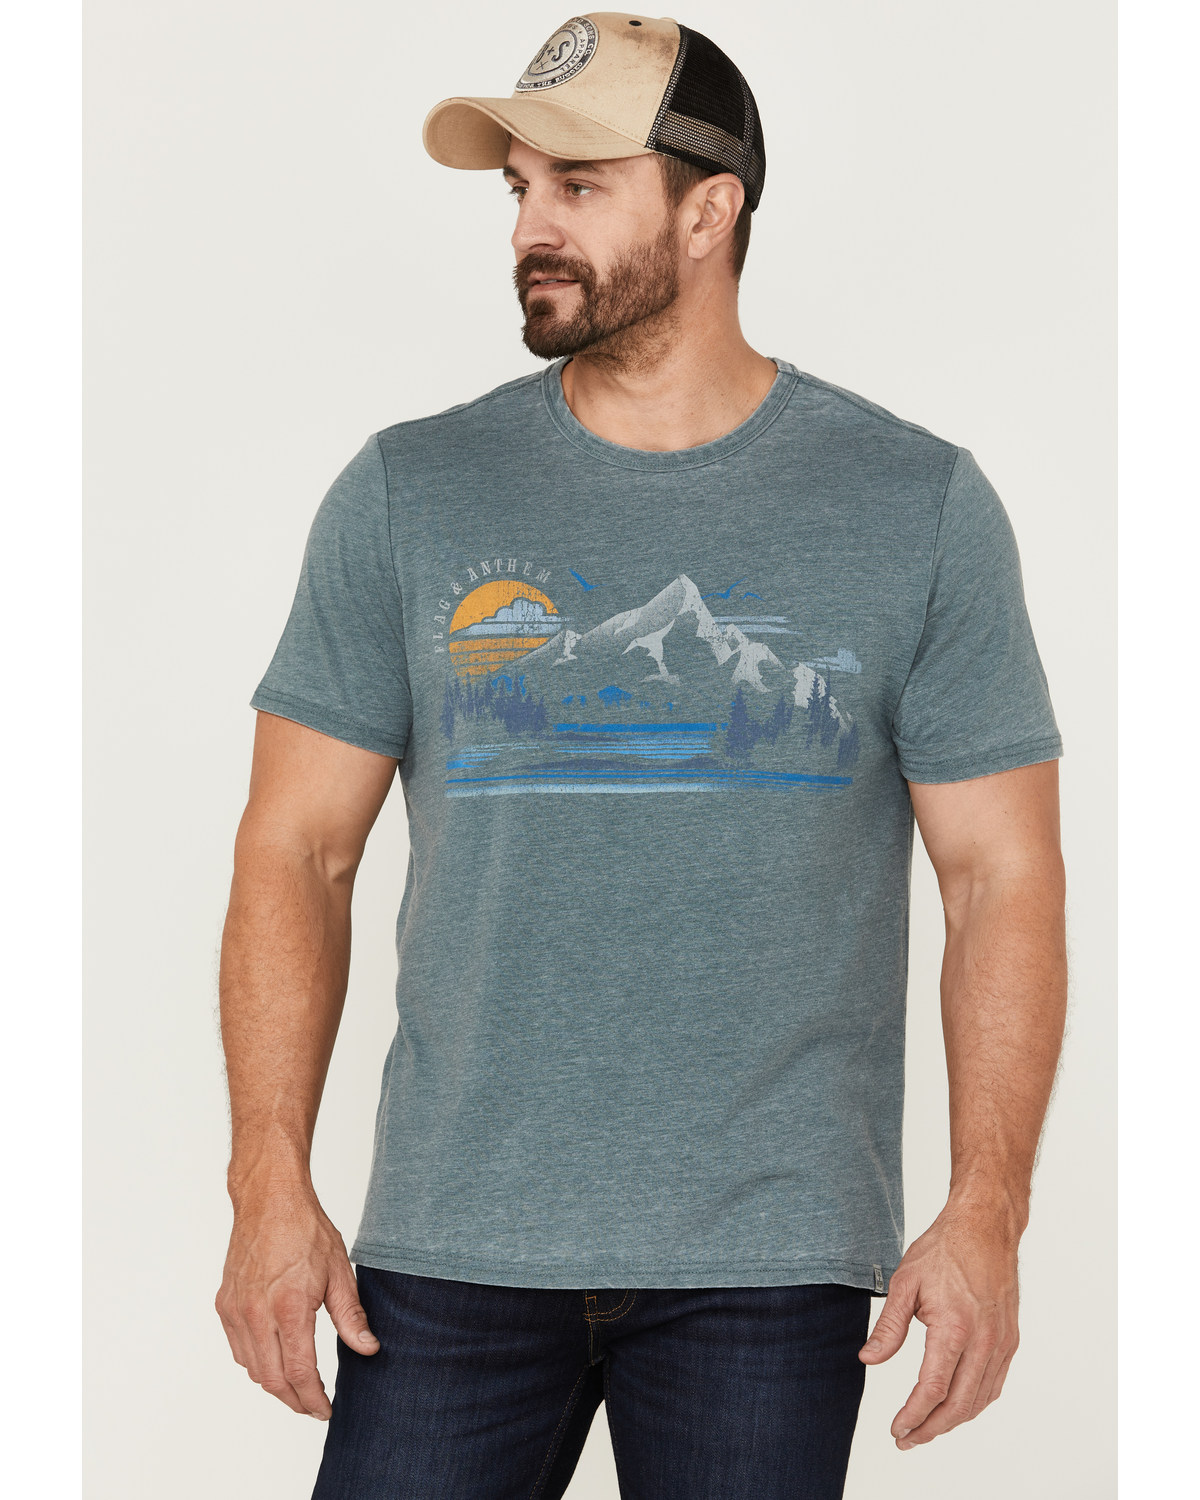 Flag & Anthem Men's Scenic Mountain Burnout Graphic T-Shirt